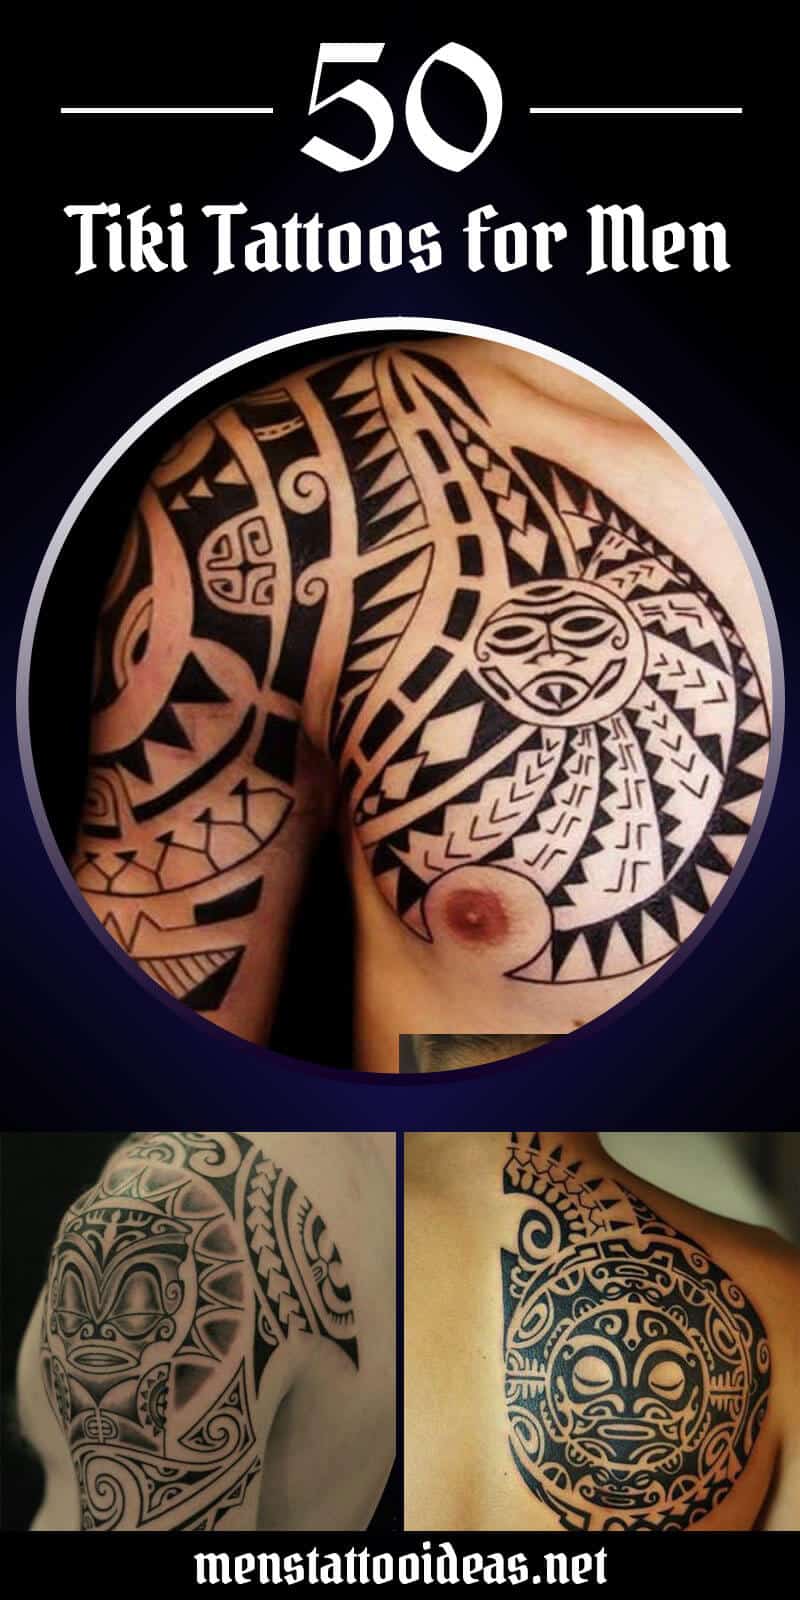 tiki-tattoos-for-men-collage 